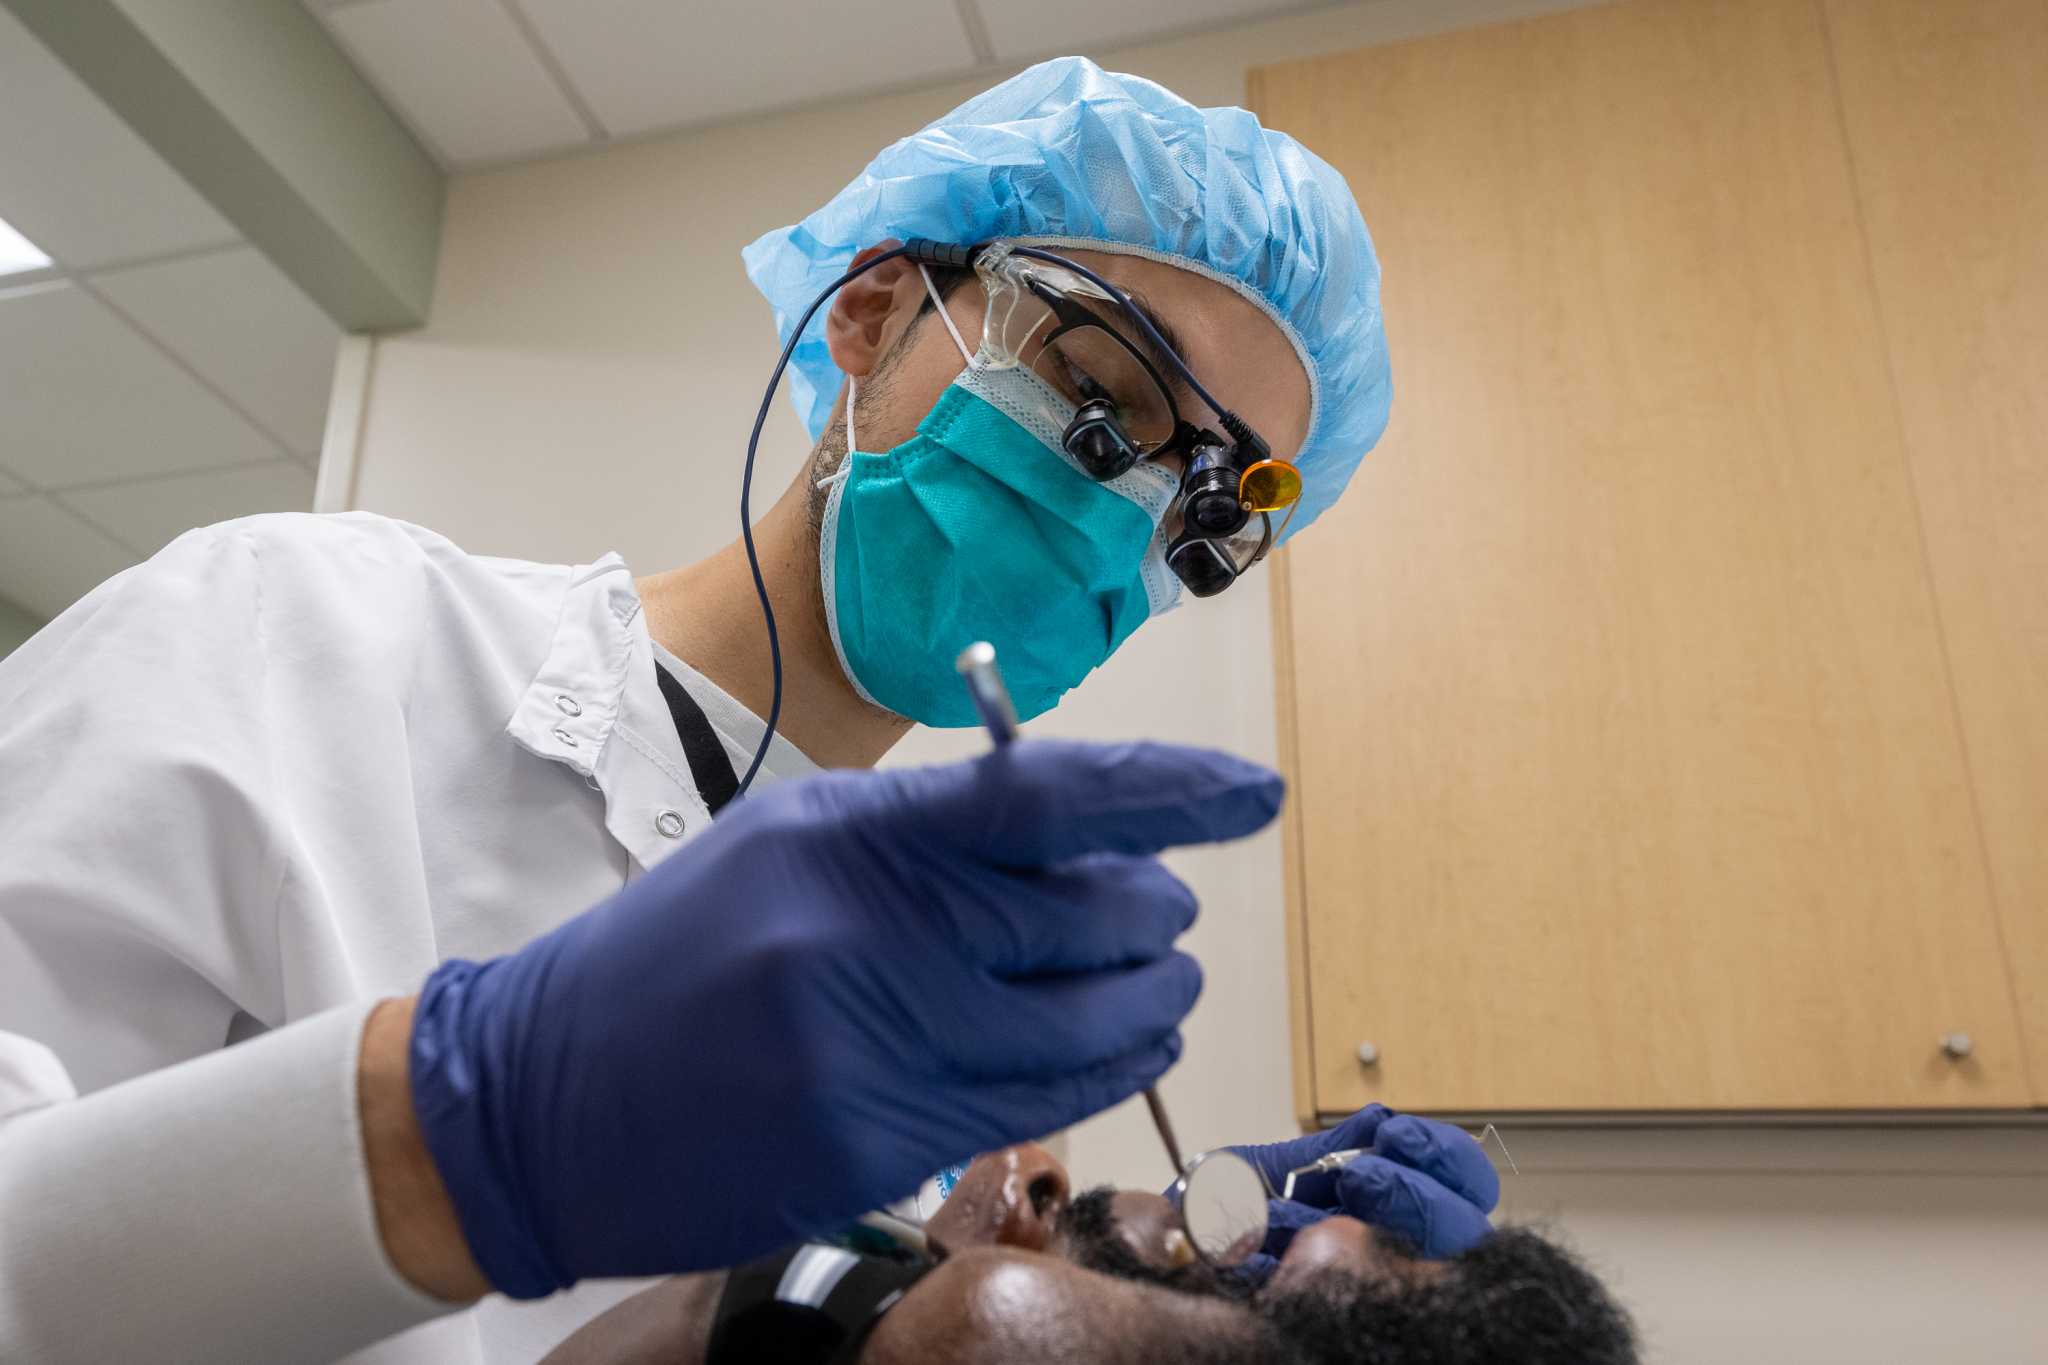 St. Peter’s closing dental clinic, growing Medicaid disparities